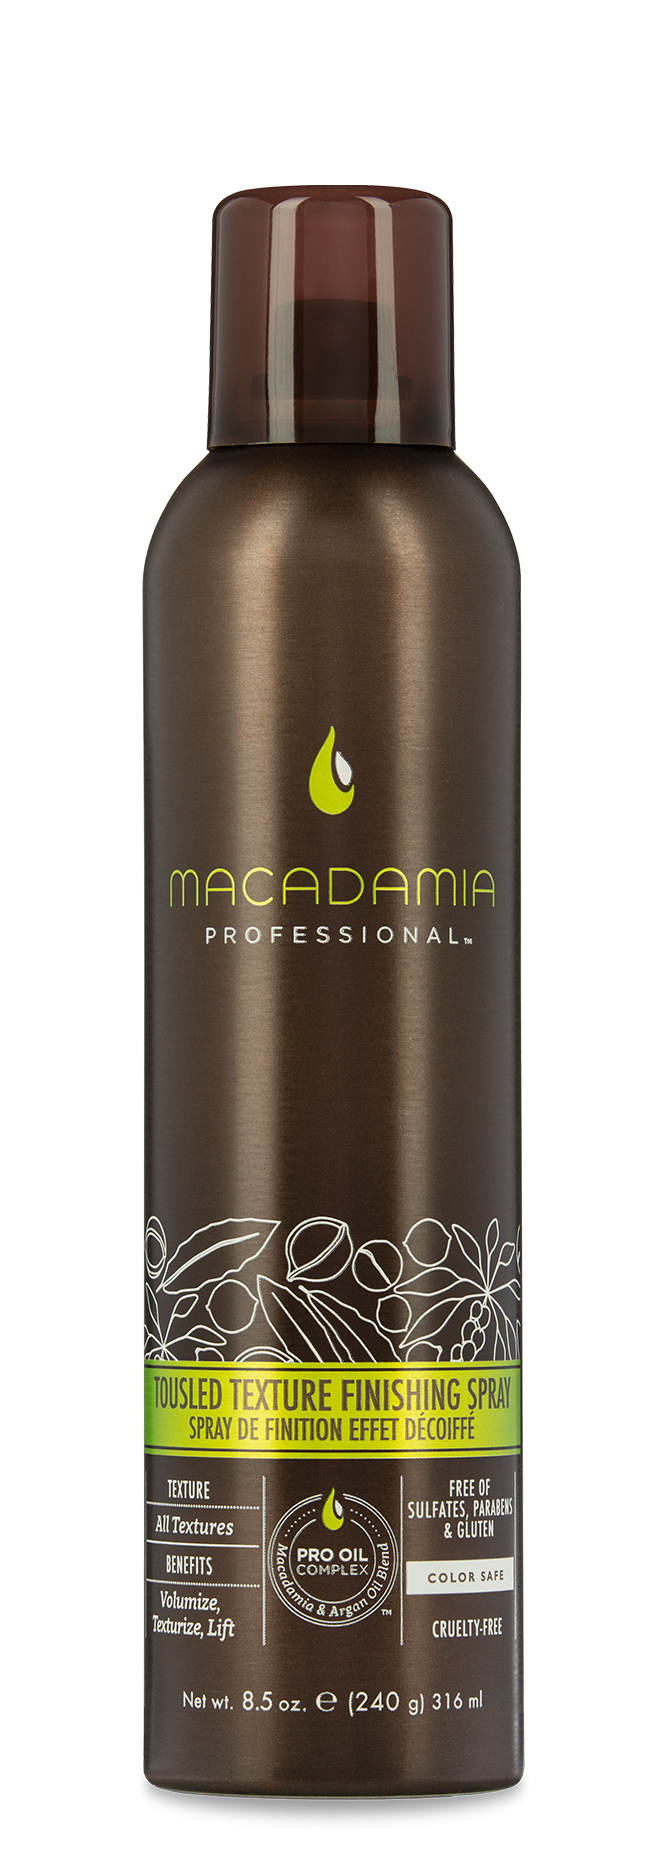 Macadamia Professional Tousled Texture Finishing Spray